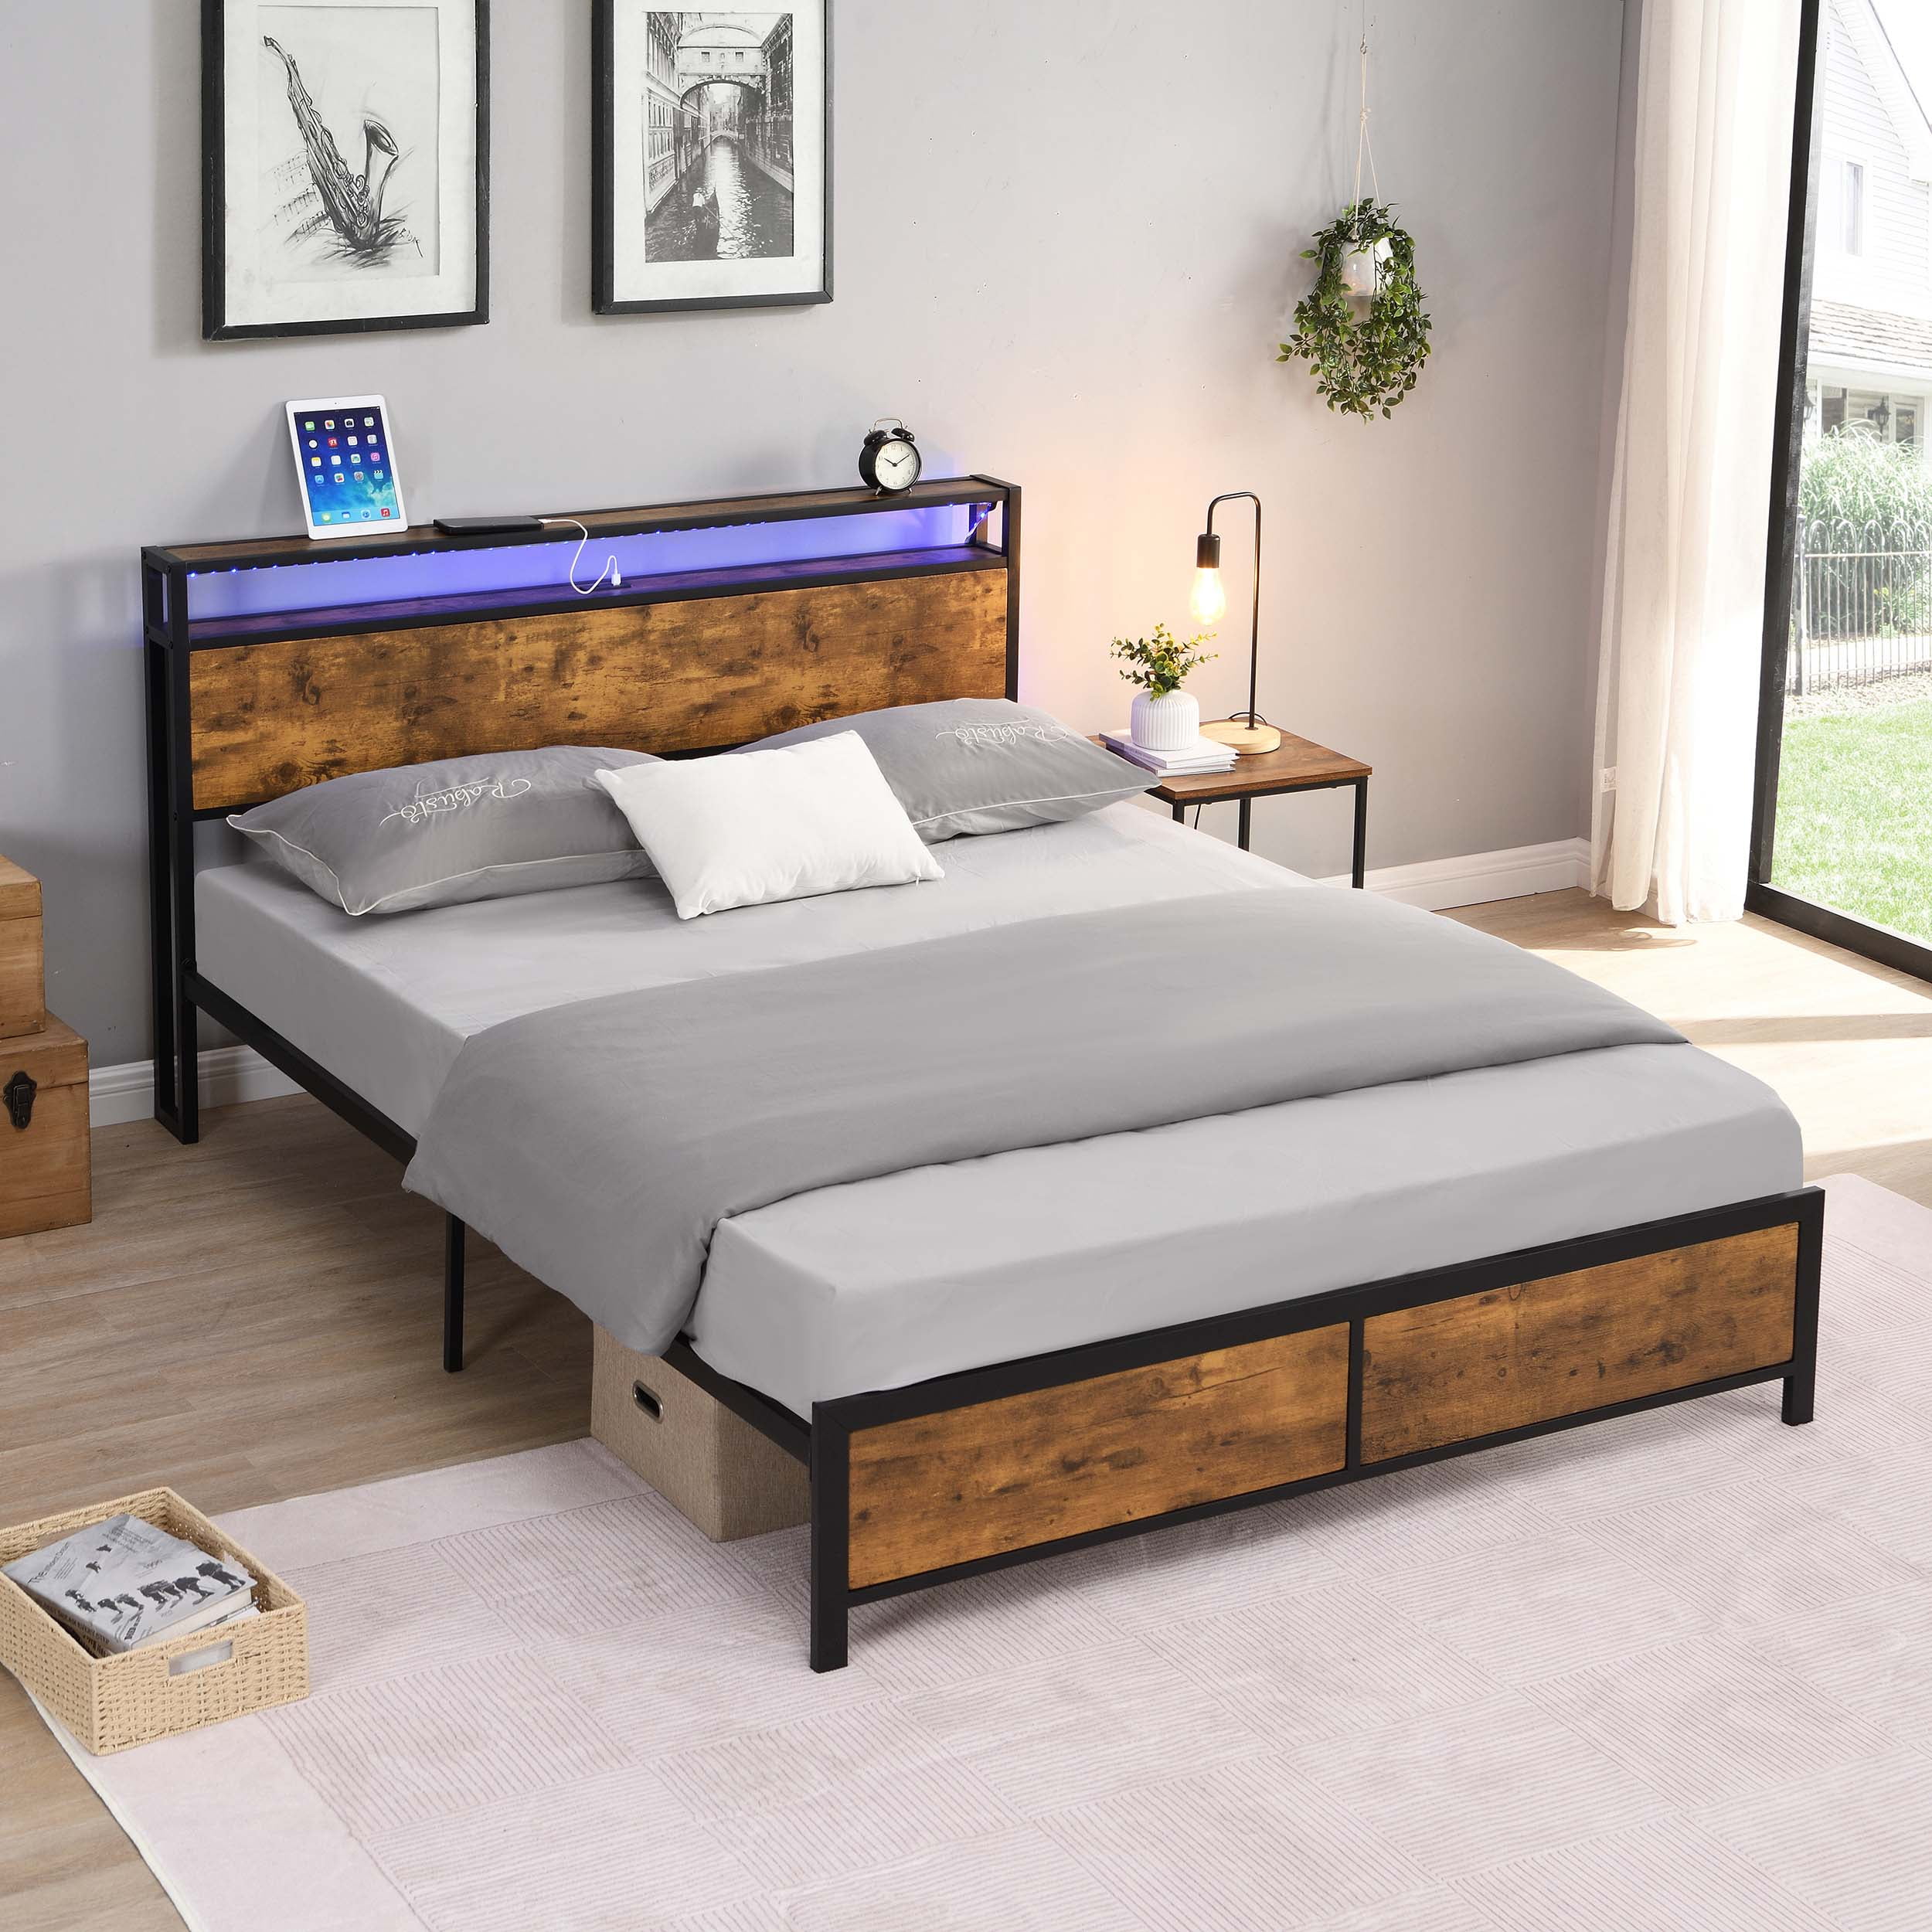 wond Vertellen campagne ADORNEVE Queen Bed Frame with Outlet and USB Ports, Modern Upholstered  Platform Bed with Storage Headboard & Height Adjustable, Dark Grey -  Walmart.com